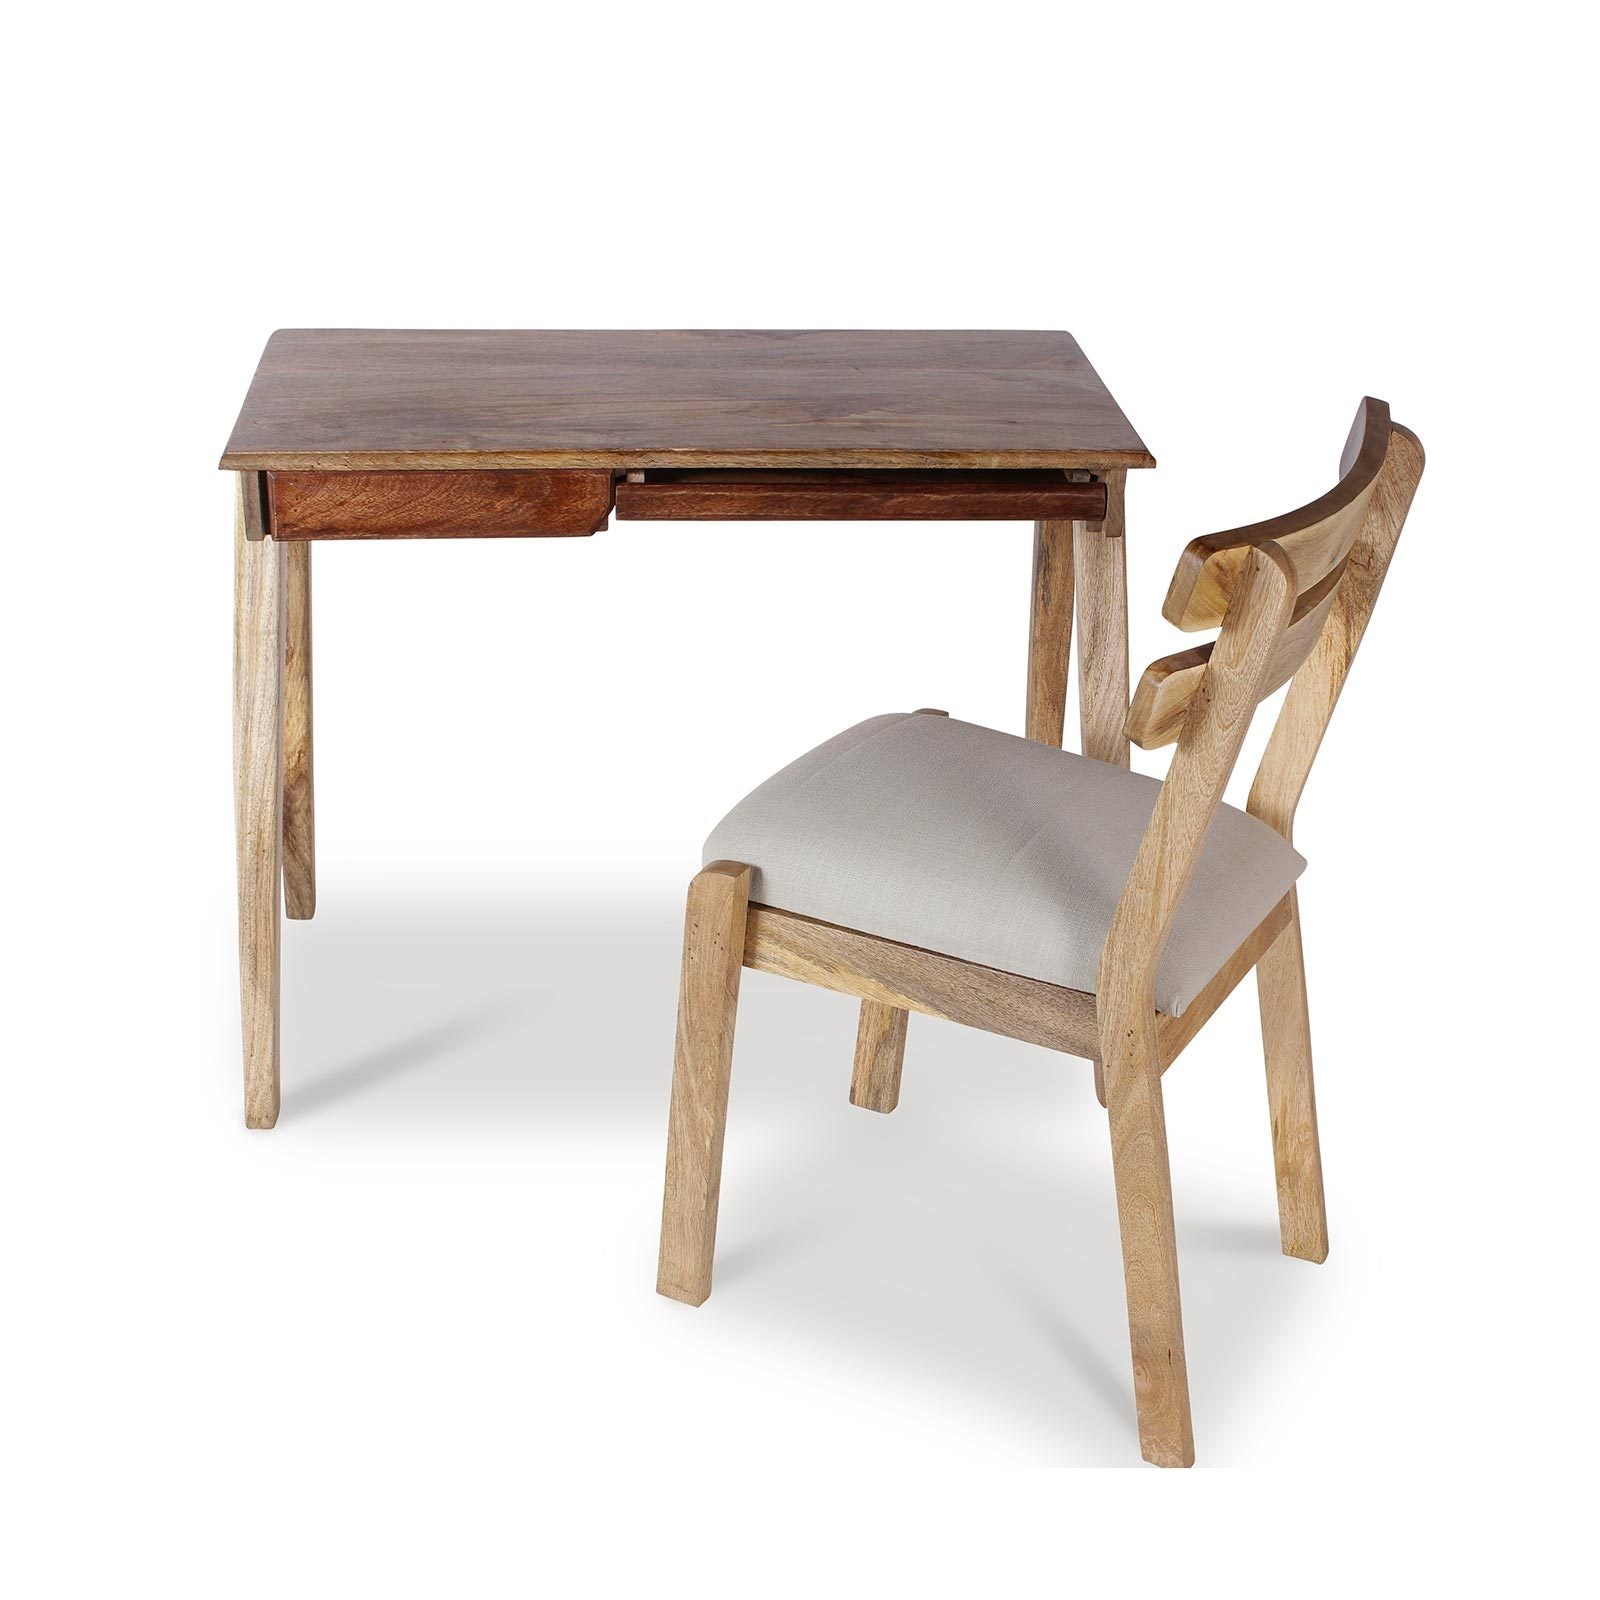 Buy Wooden Study Table online